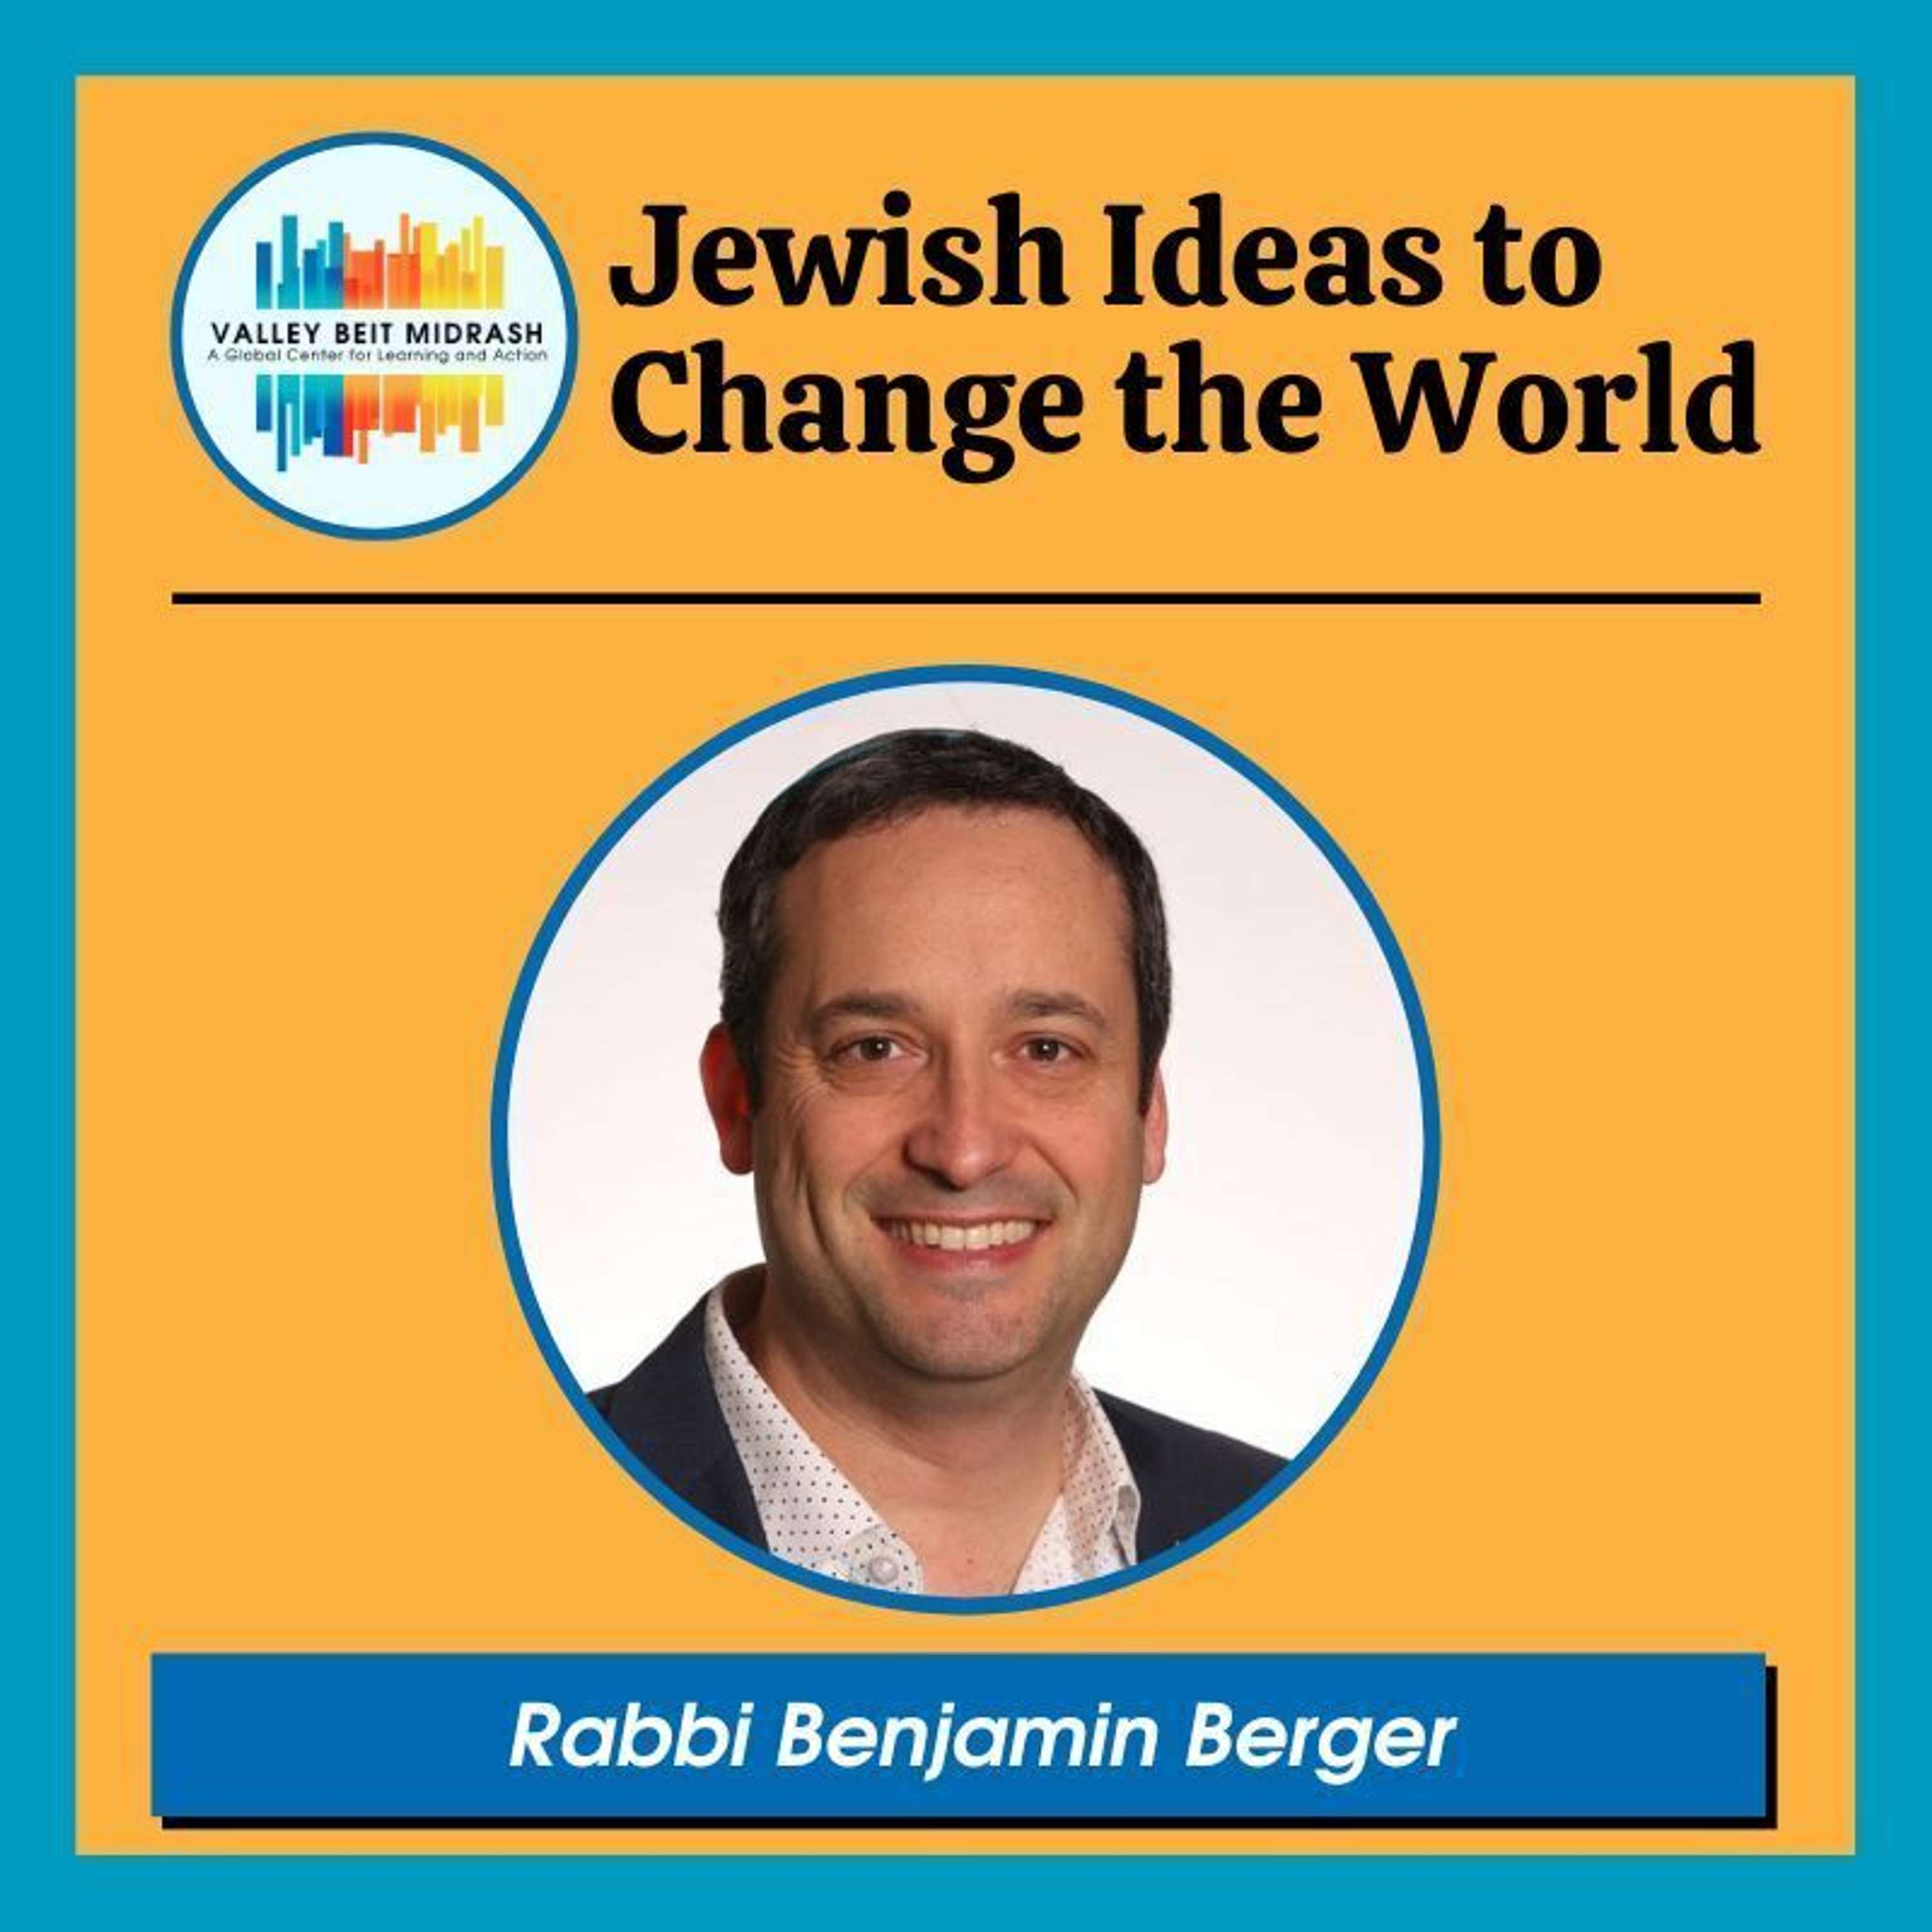 Israel Education on Campus: Rabbi Benjamin Berger Interviewed by Rabbi Dr. Shmuly Yanklowtiz